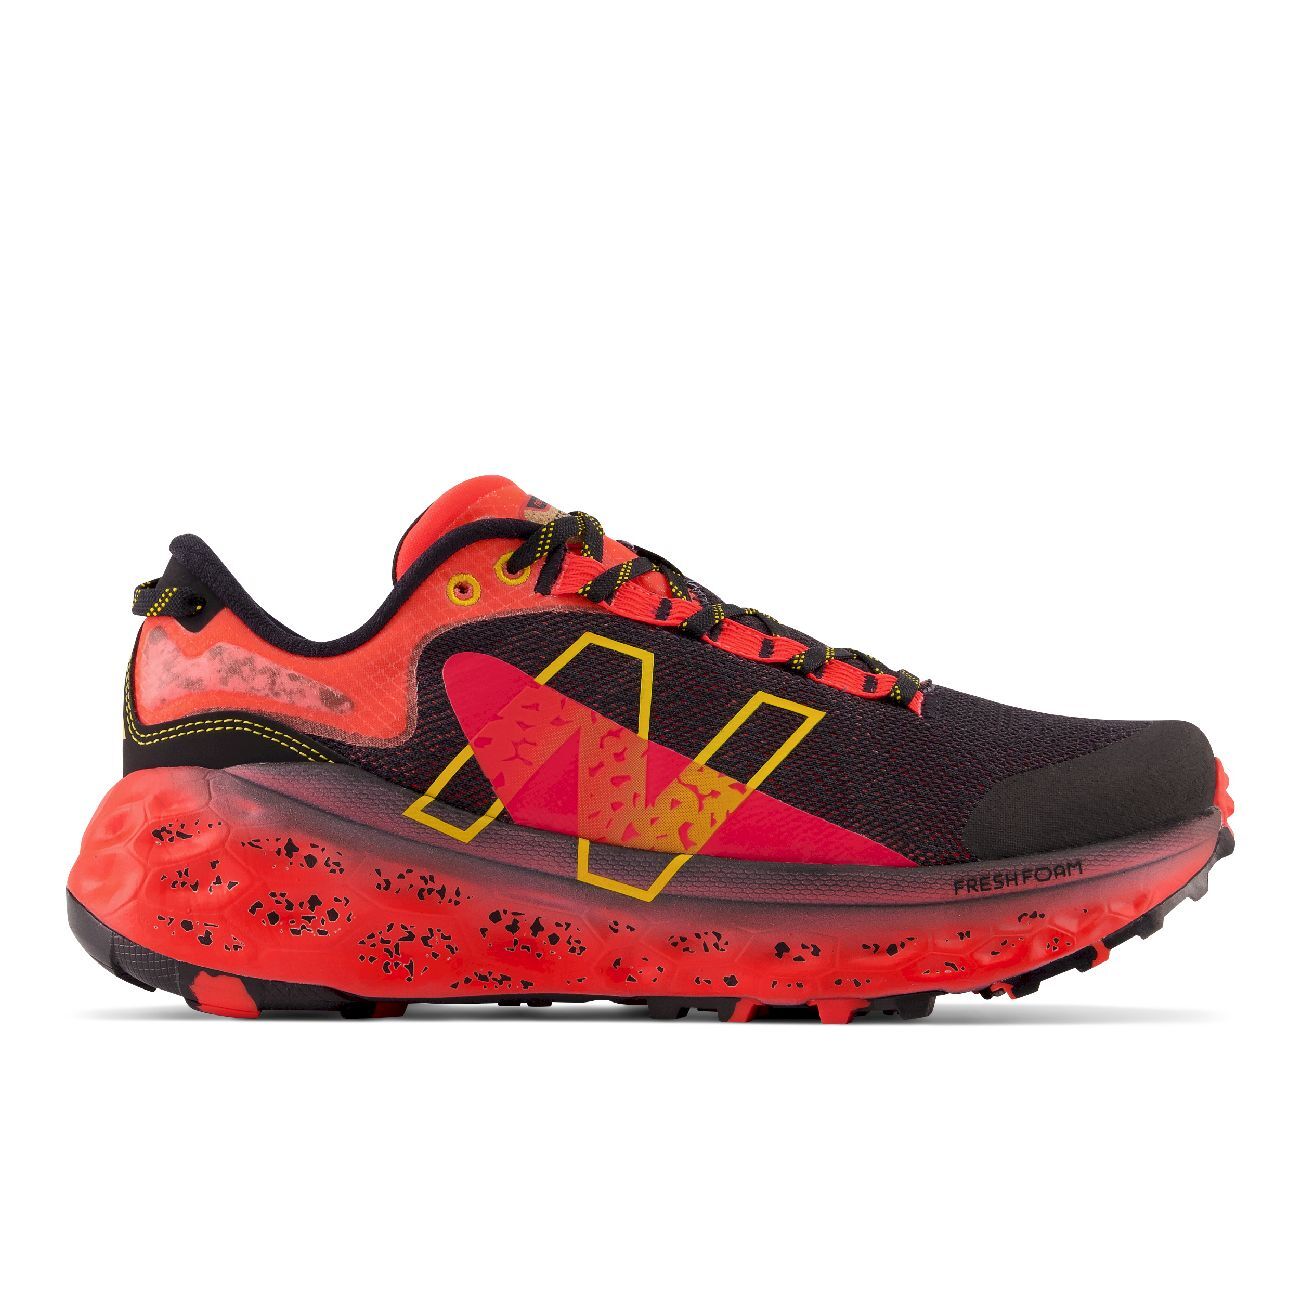 New Balance Fresh Foam More Trail V2 - Trail running shoes - Men's